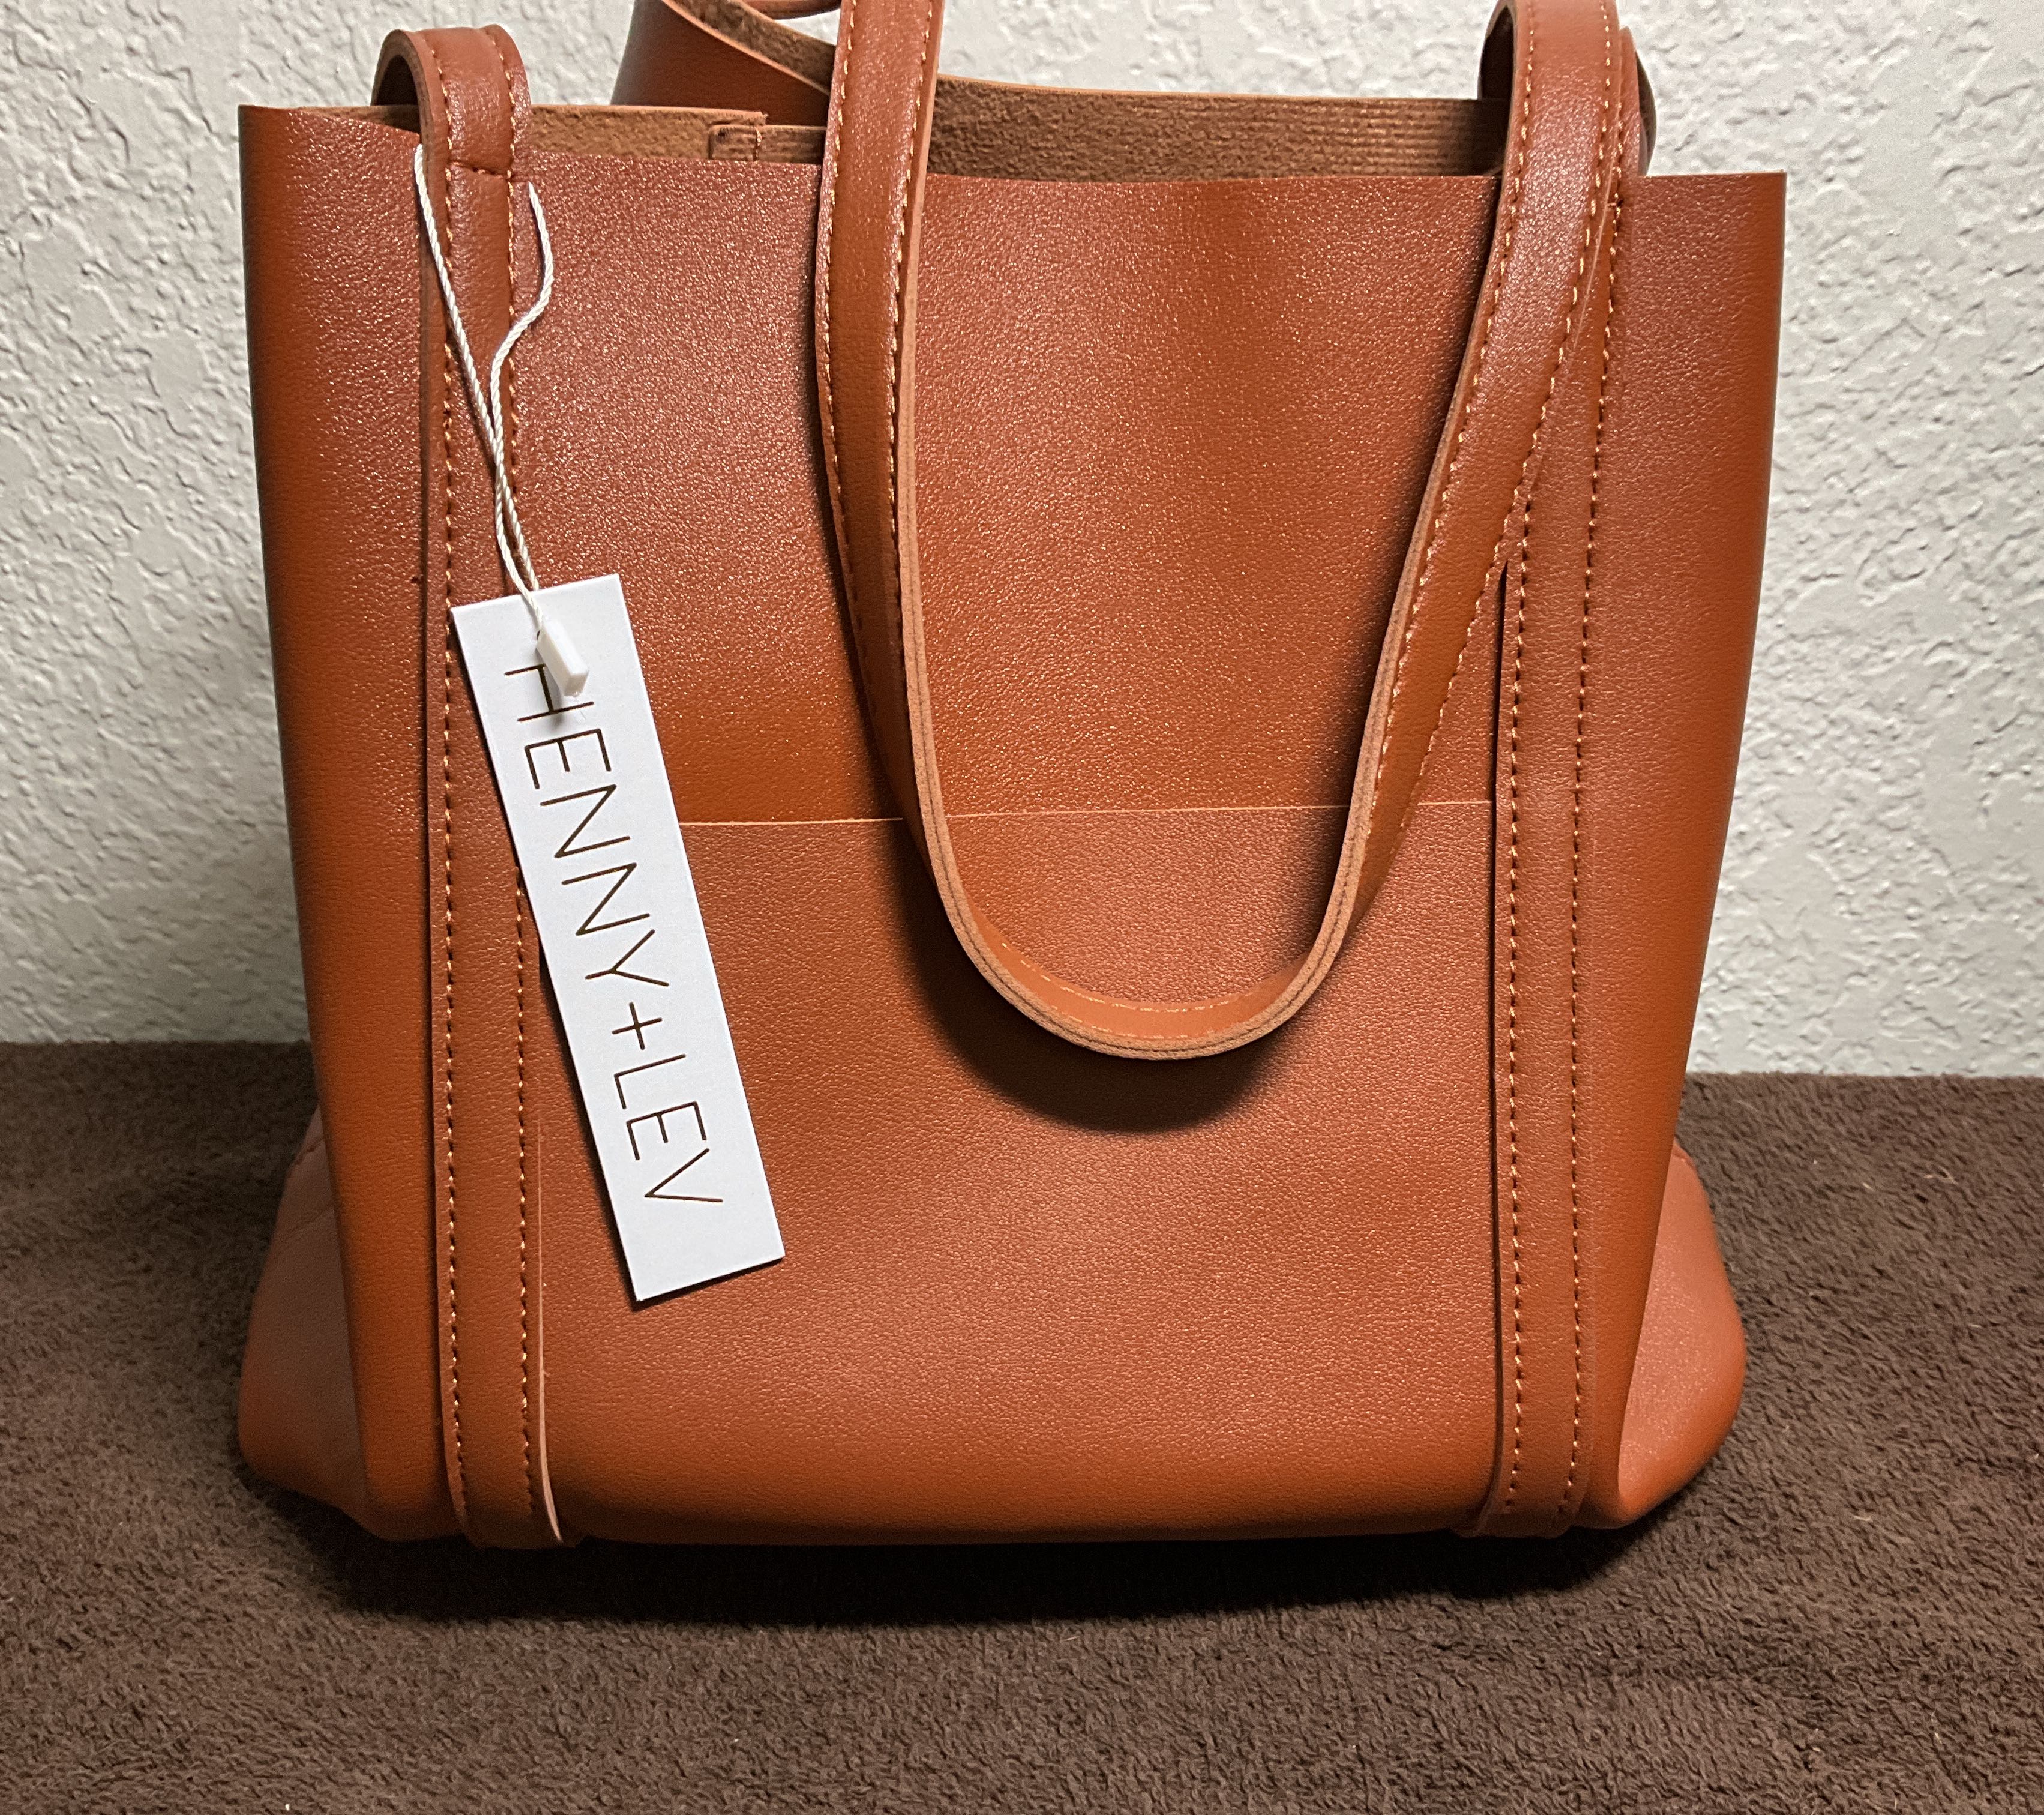 Why do women buy luxury designer handbags, e.g., those that cost $400 or  more? - Quora